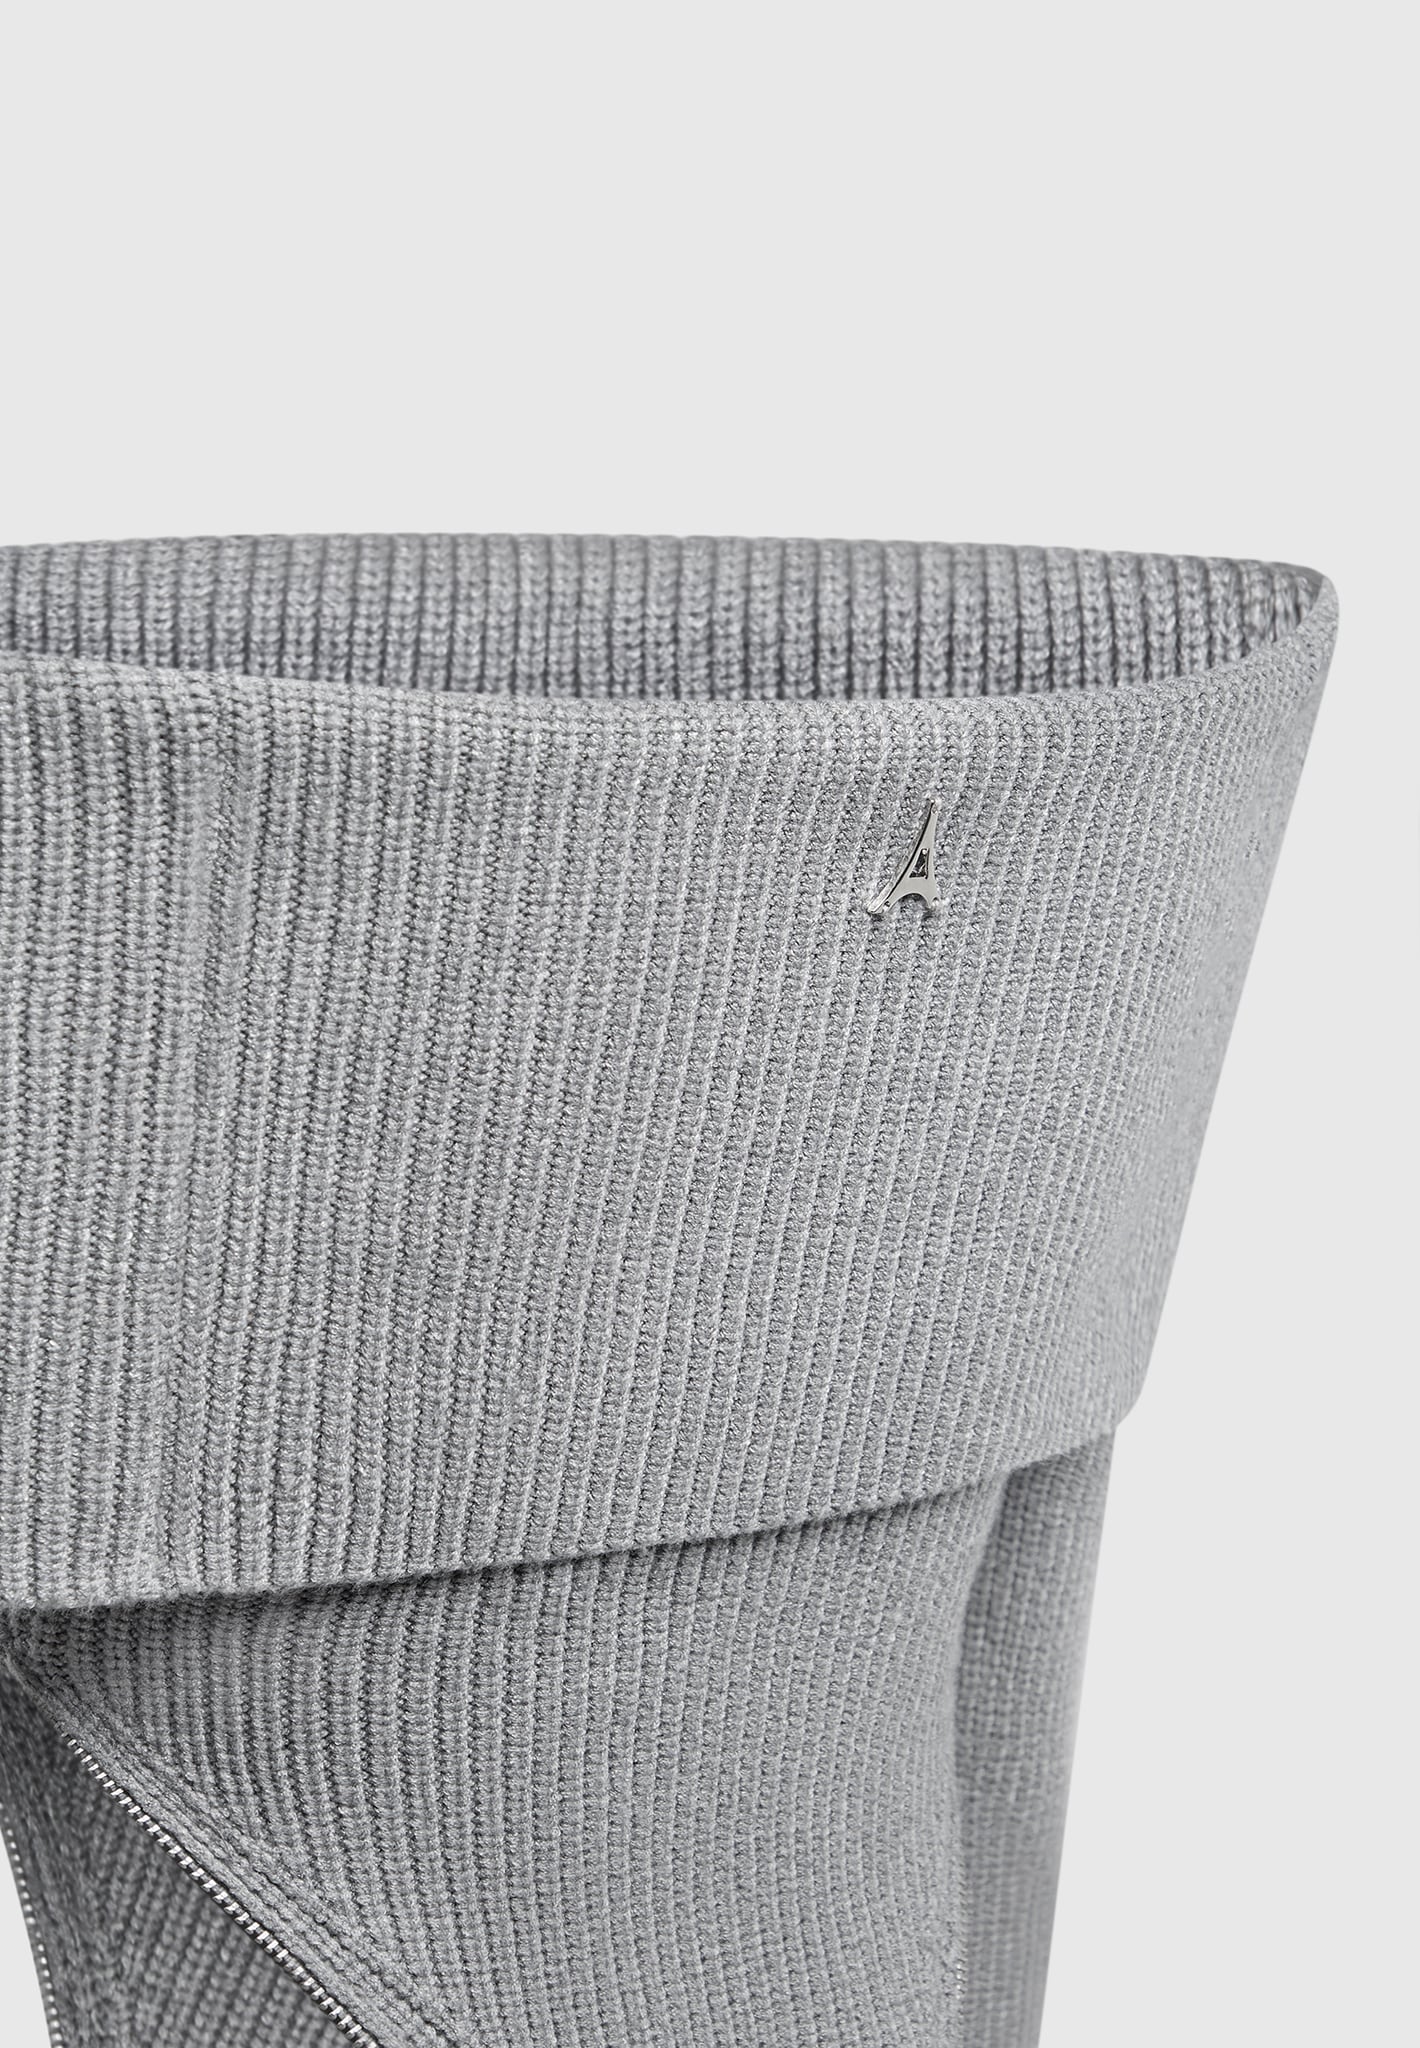 zip-detail-knit-bandeau-top-grey